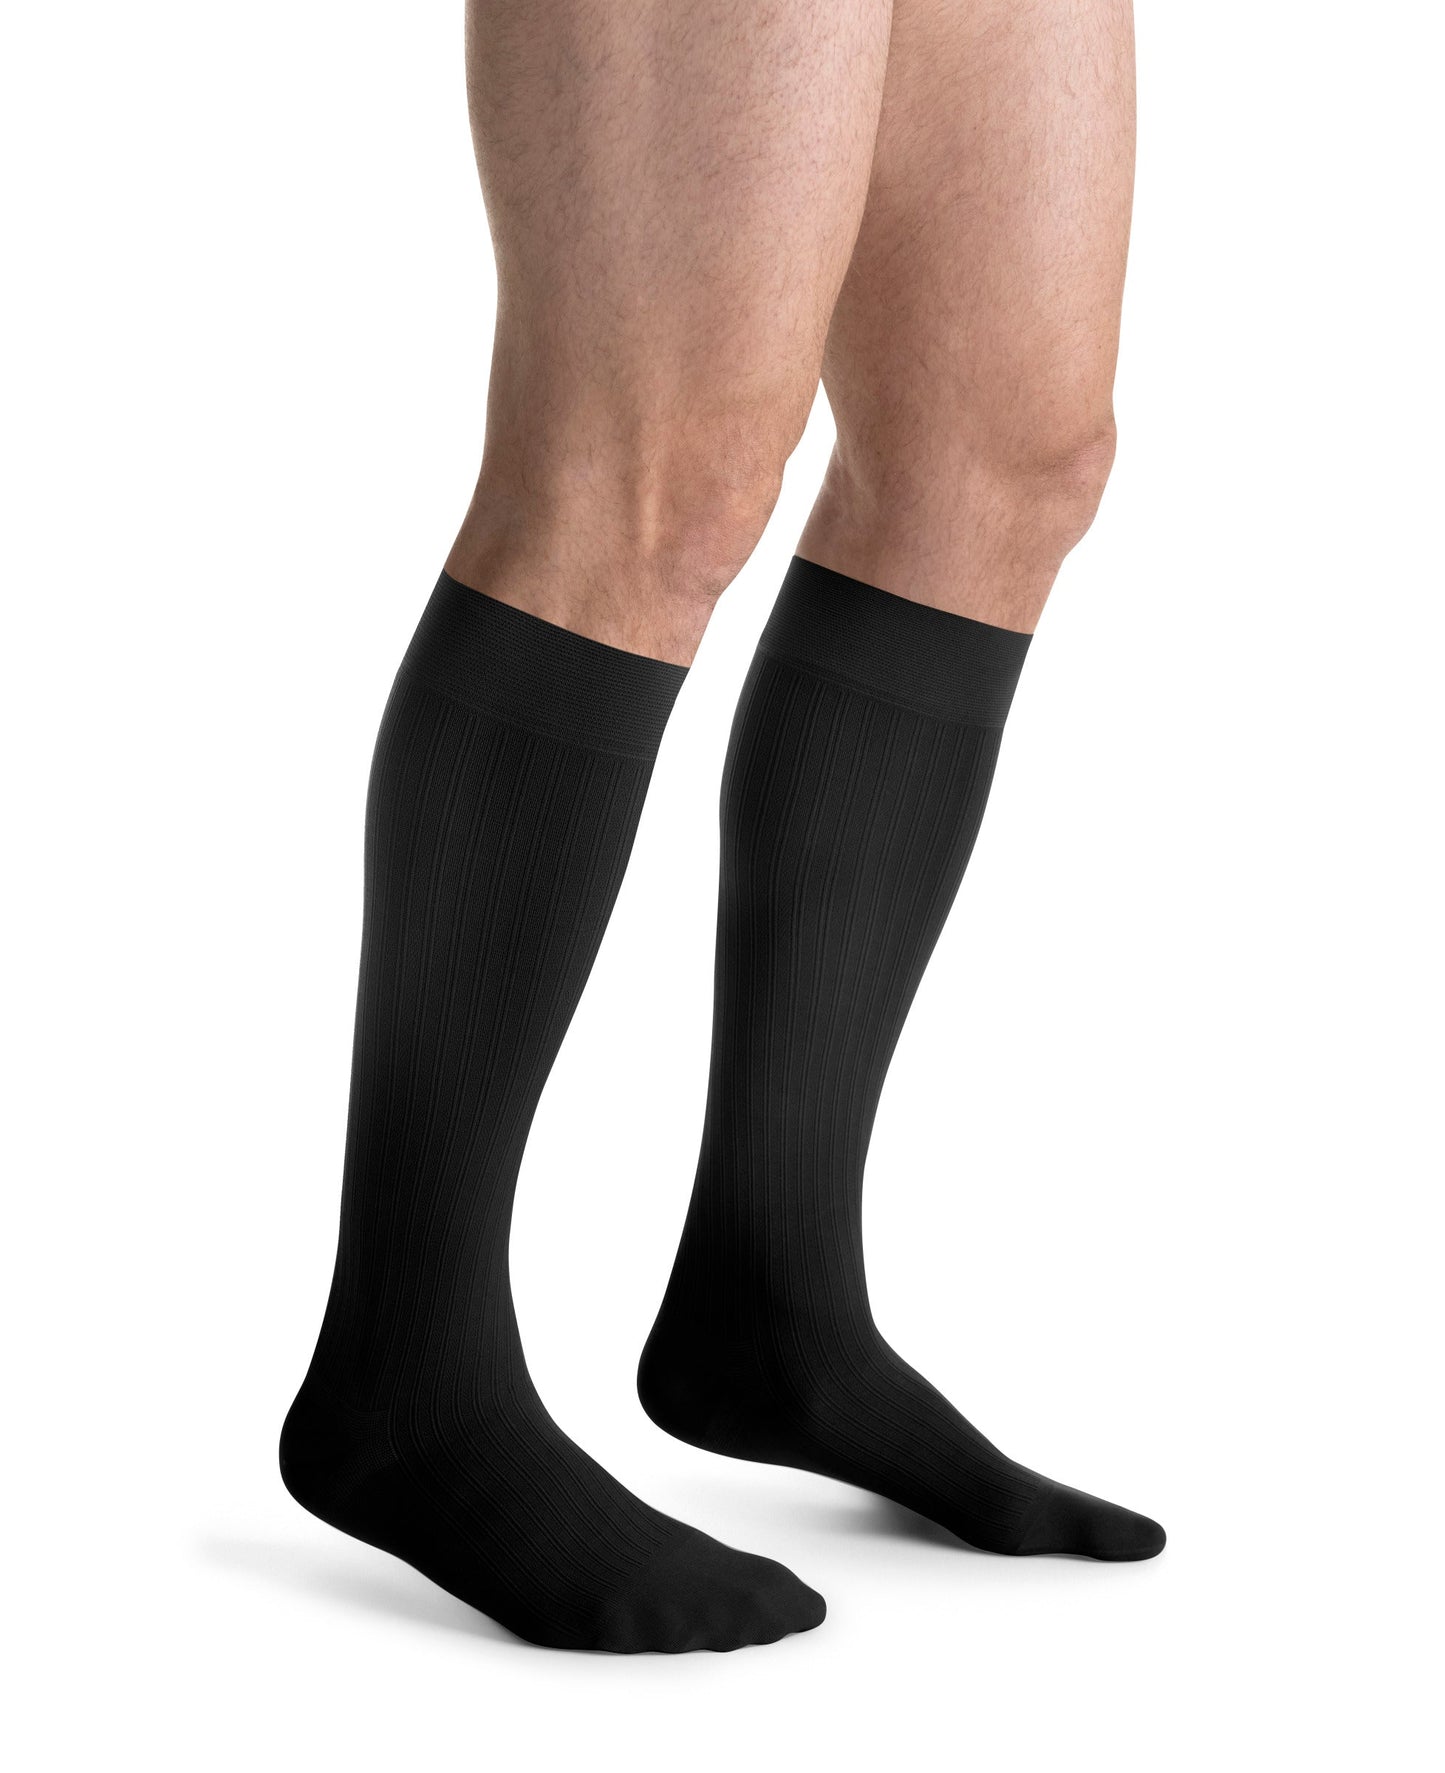 JOBST forMen Ambition Compression Socks 15-20 mmHg Knee High SoftFit Closed Toe Long